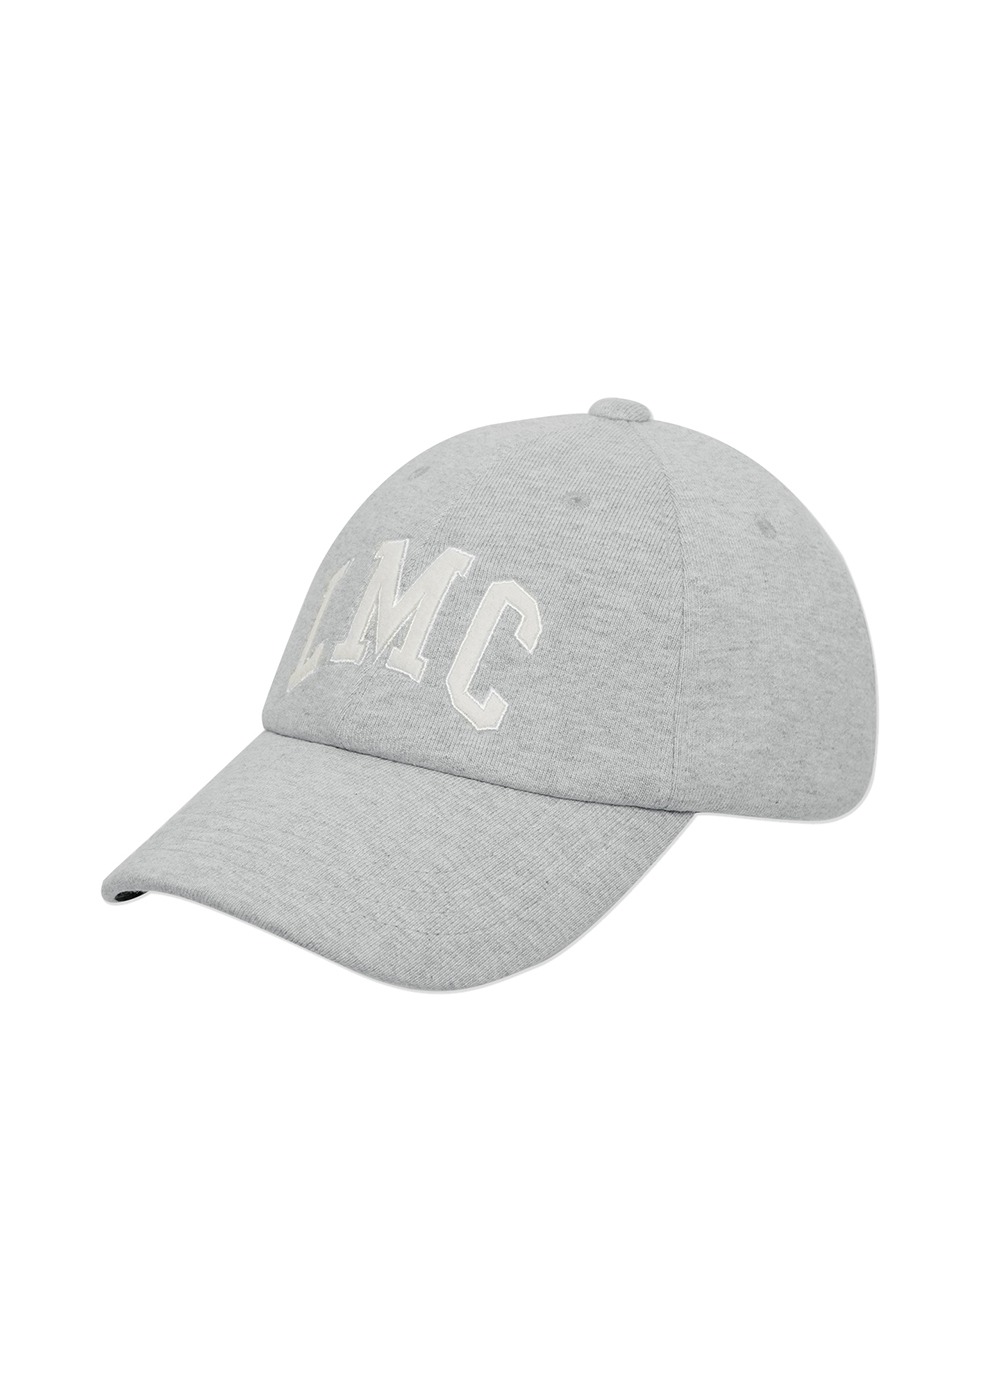 LMC ARCH SWEAT 6 PANEL CAP heather gray